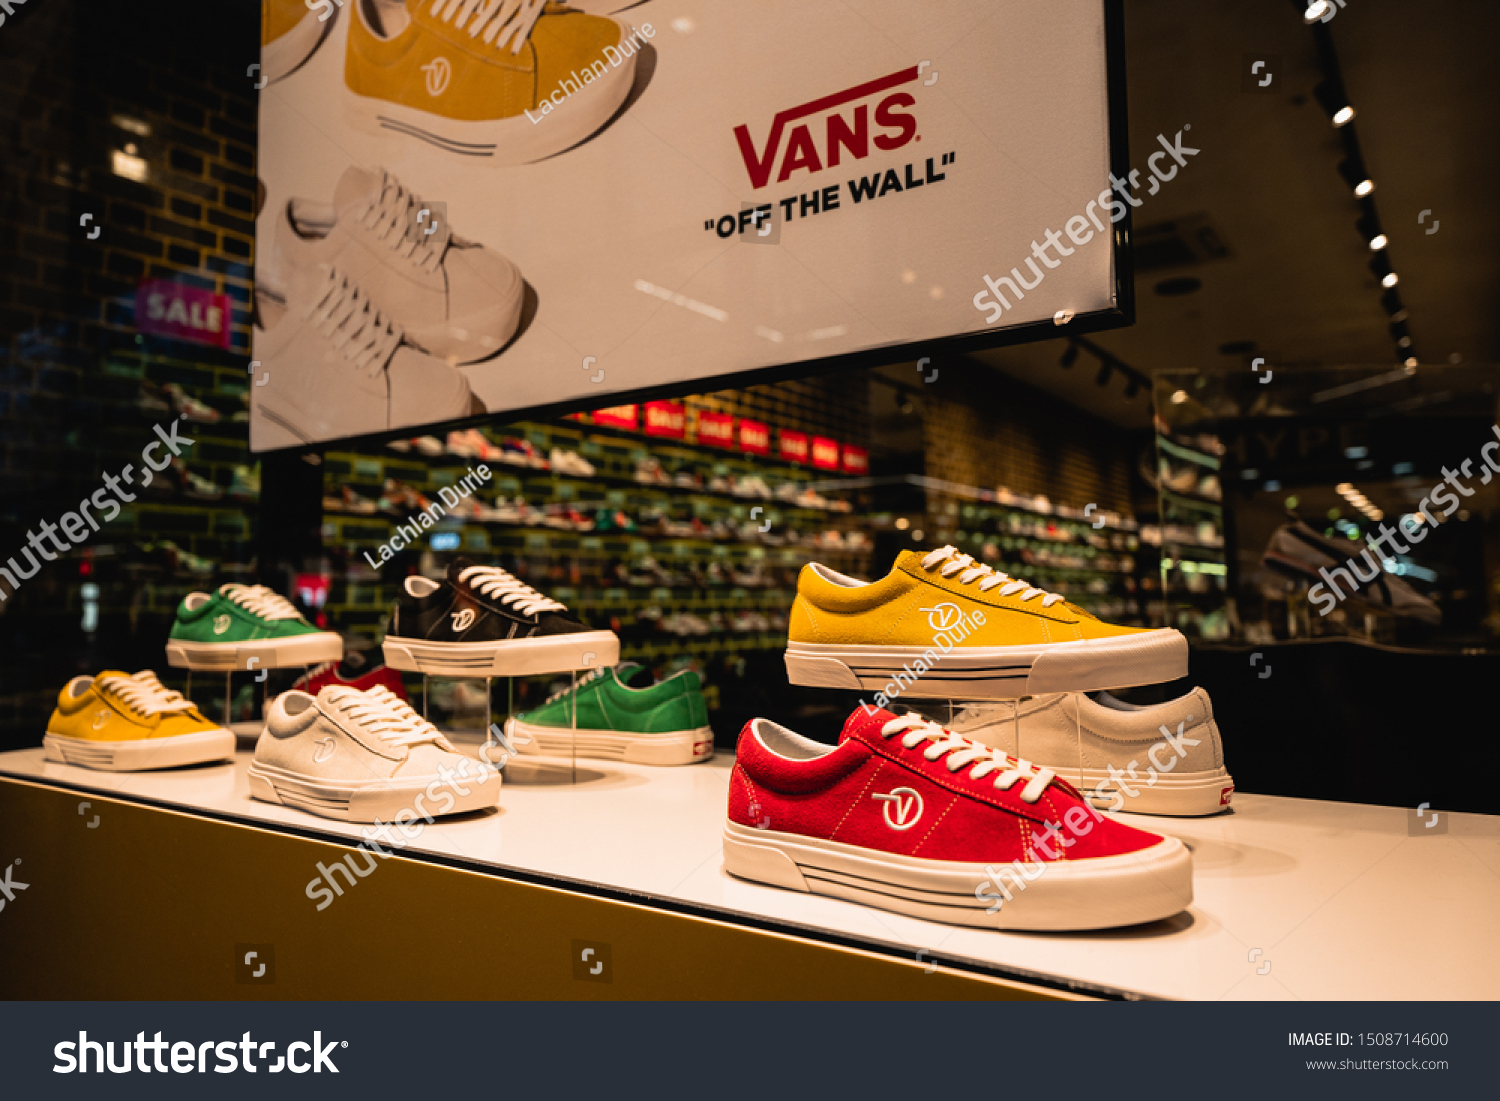 van shoes retailers